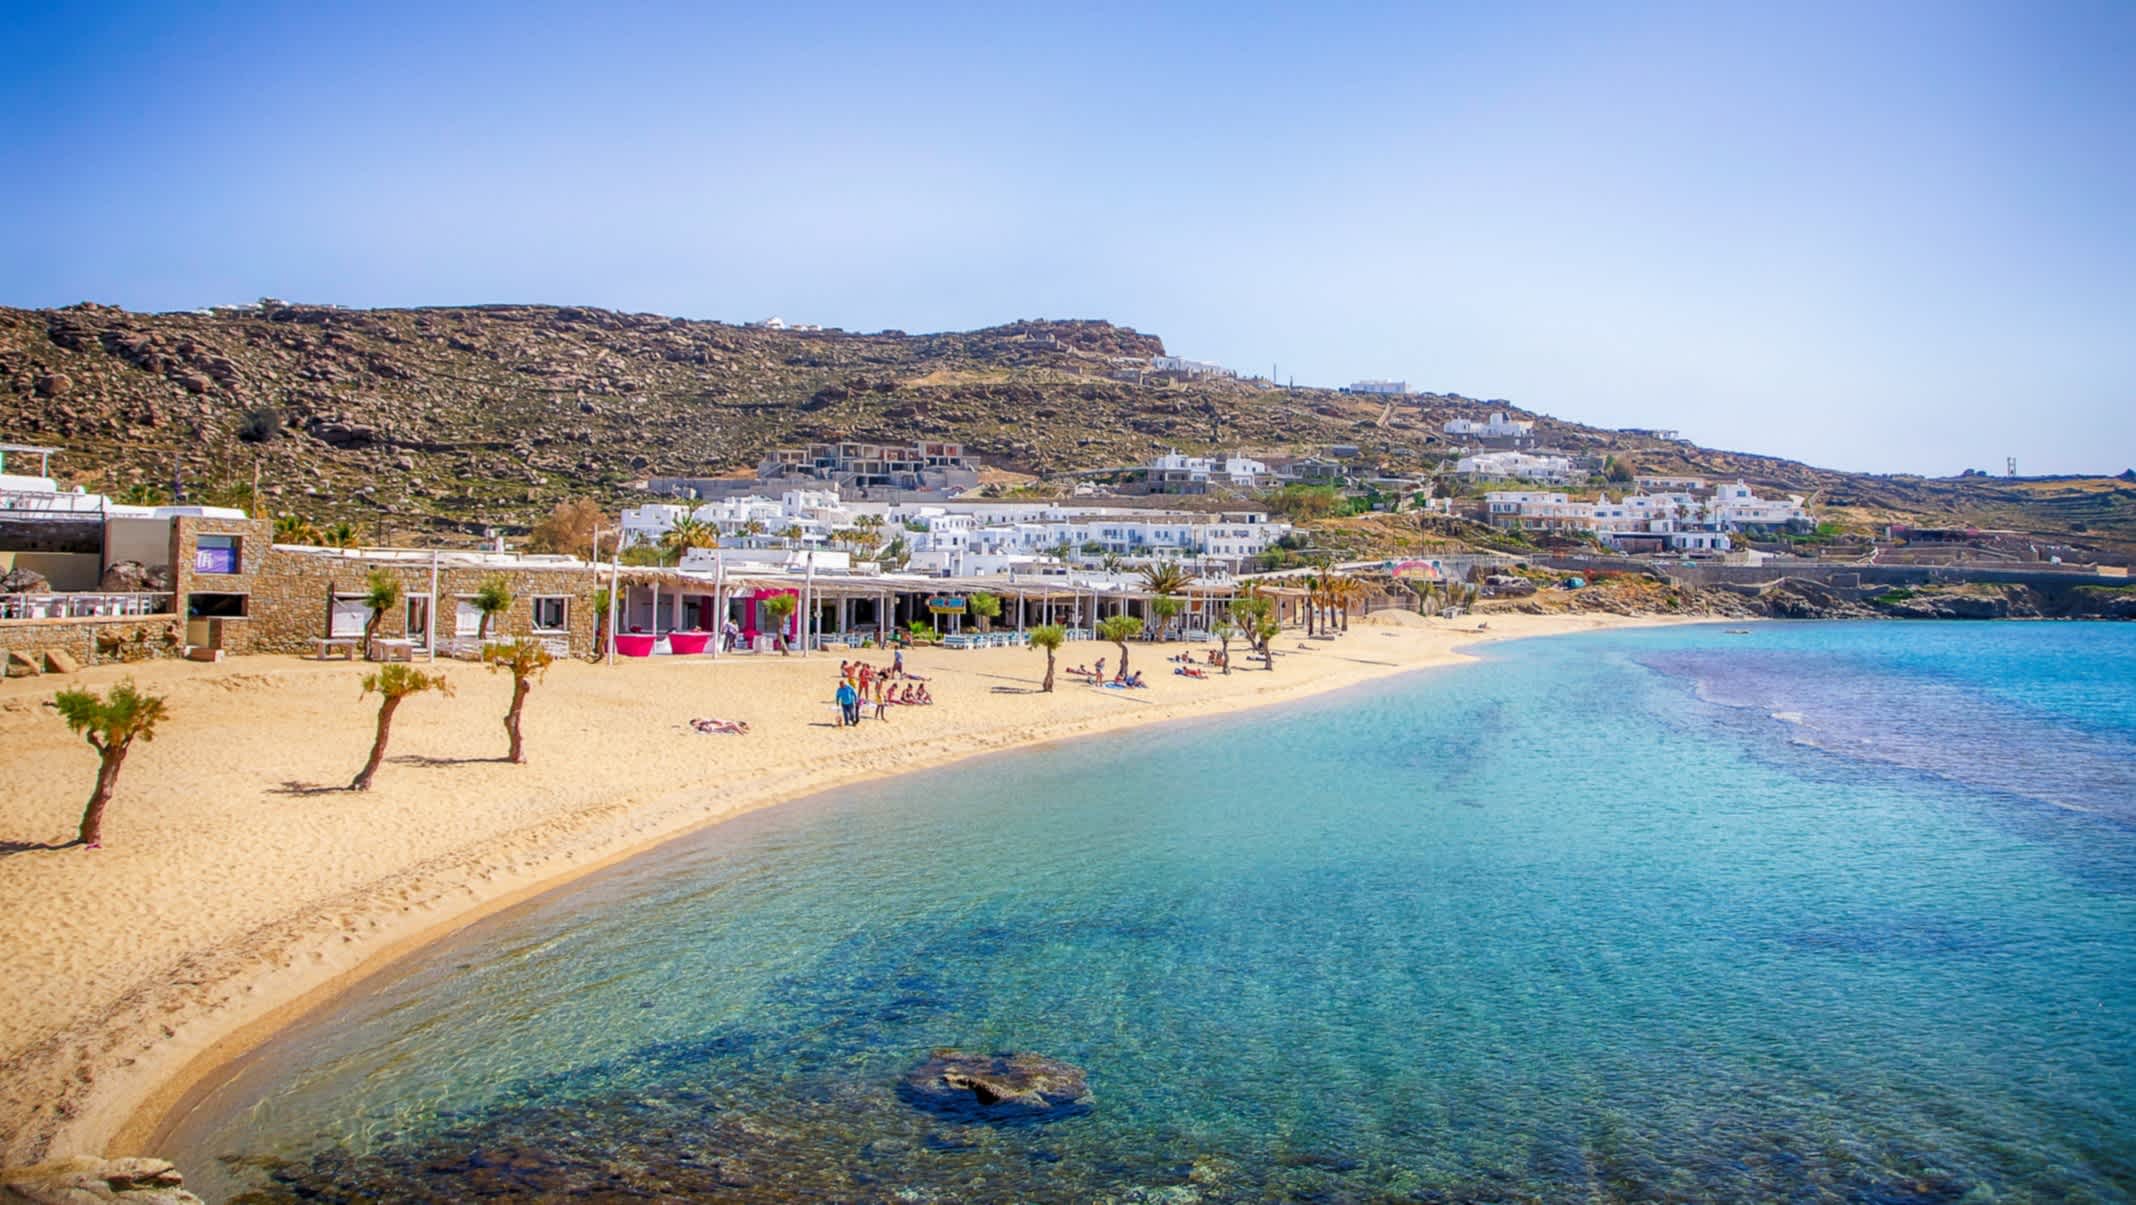 Berühmter Paradise Beach auf Mykonos, Griechenland.

